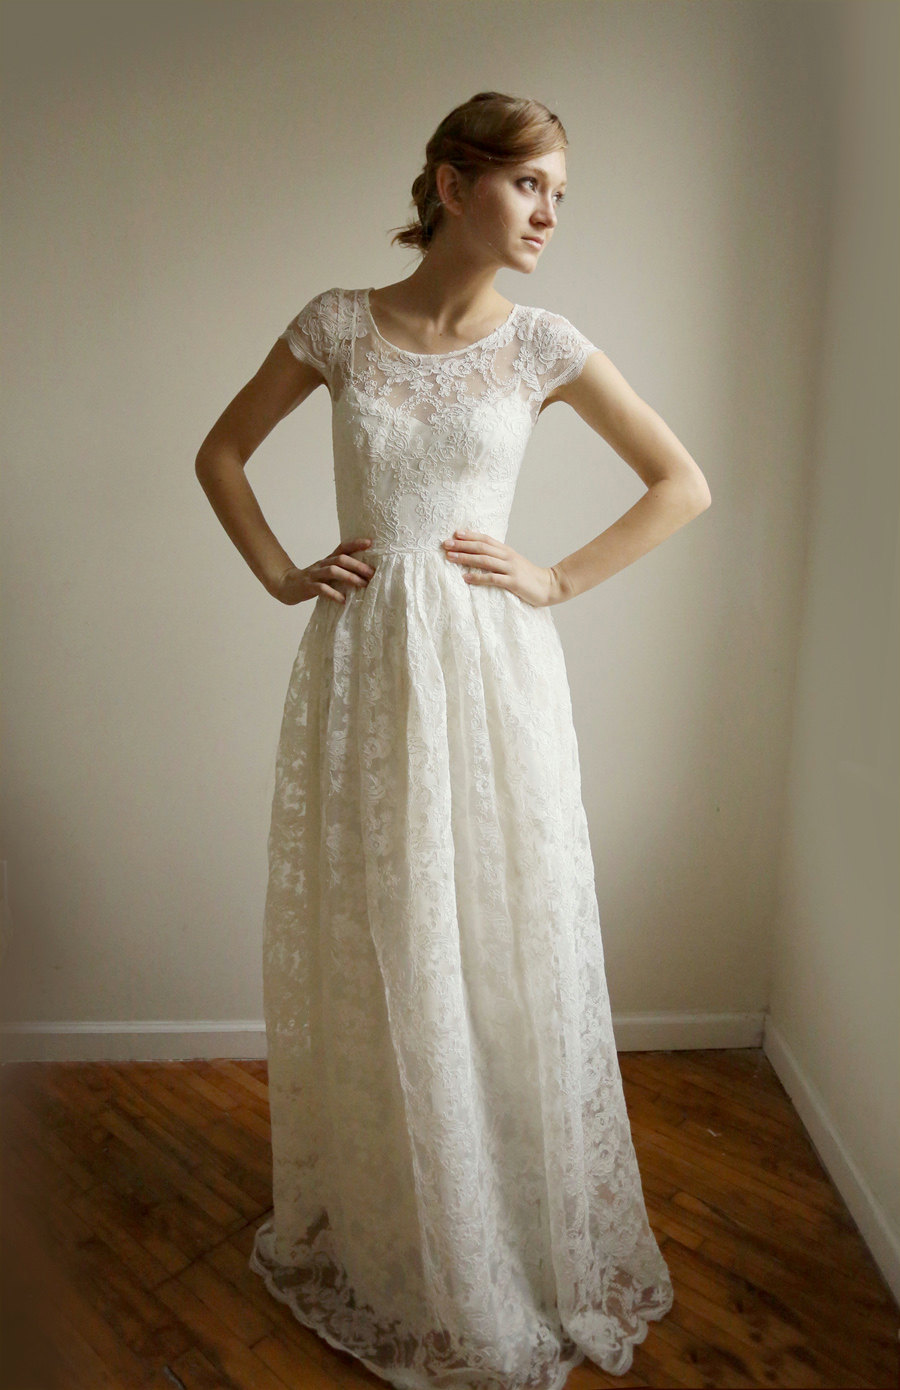 SK Fashion Talk: Cotton Wedding Dresses? Glad and Surprised!